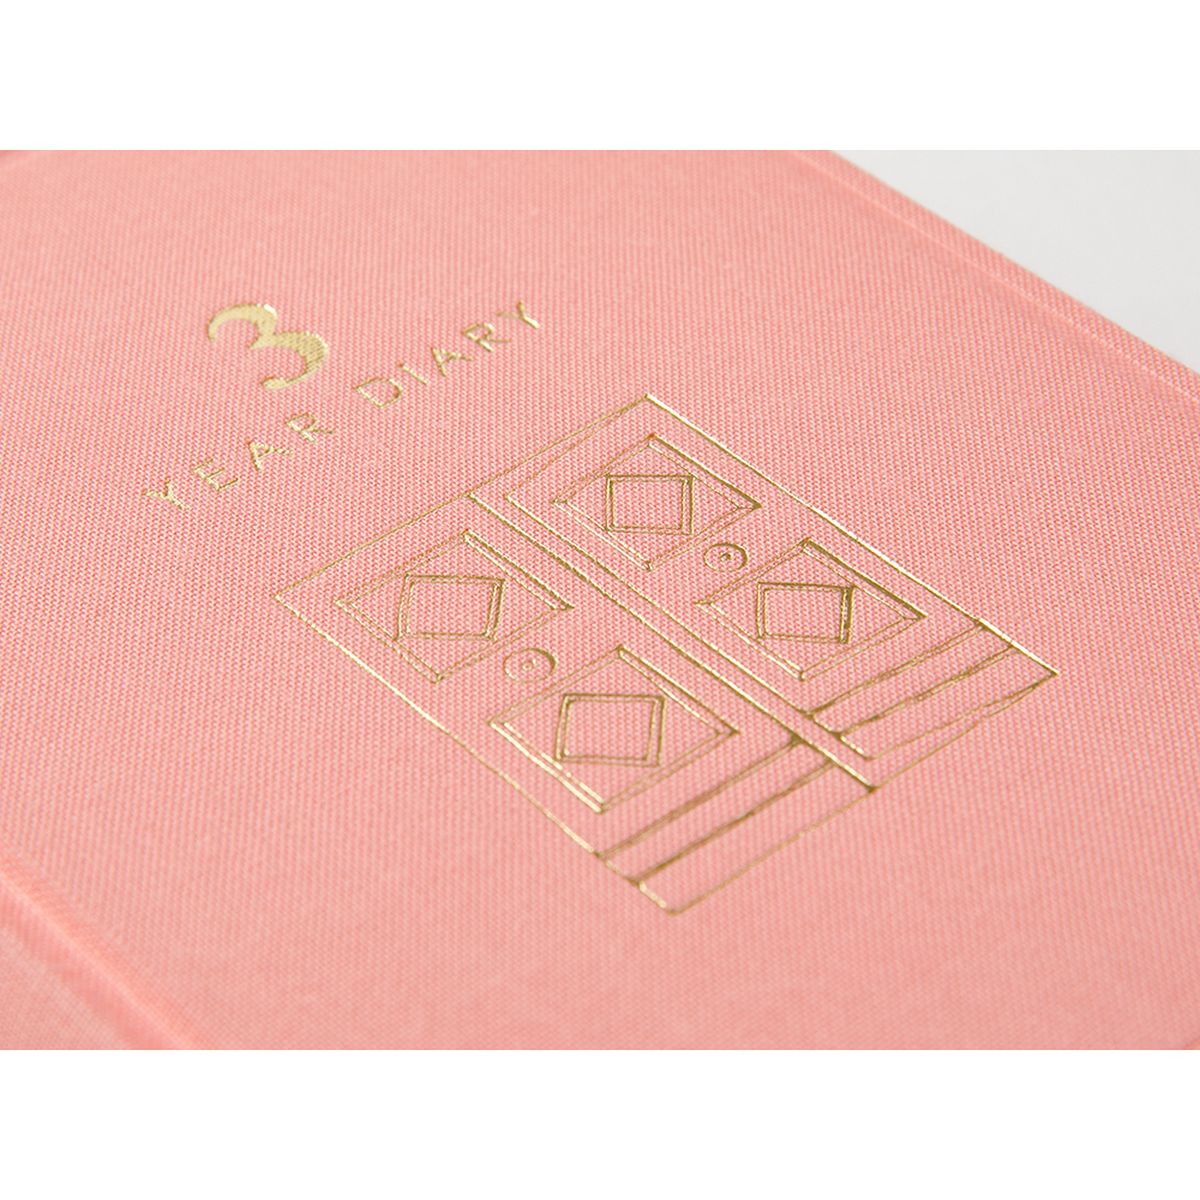 Midori Ltd Daily Diary Mini 3 Jahre, pink